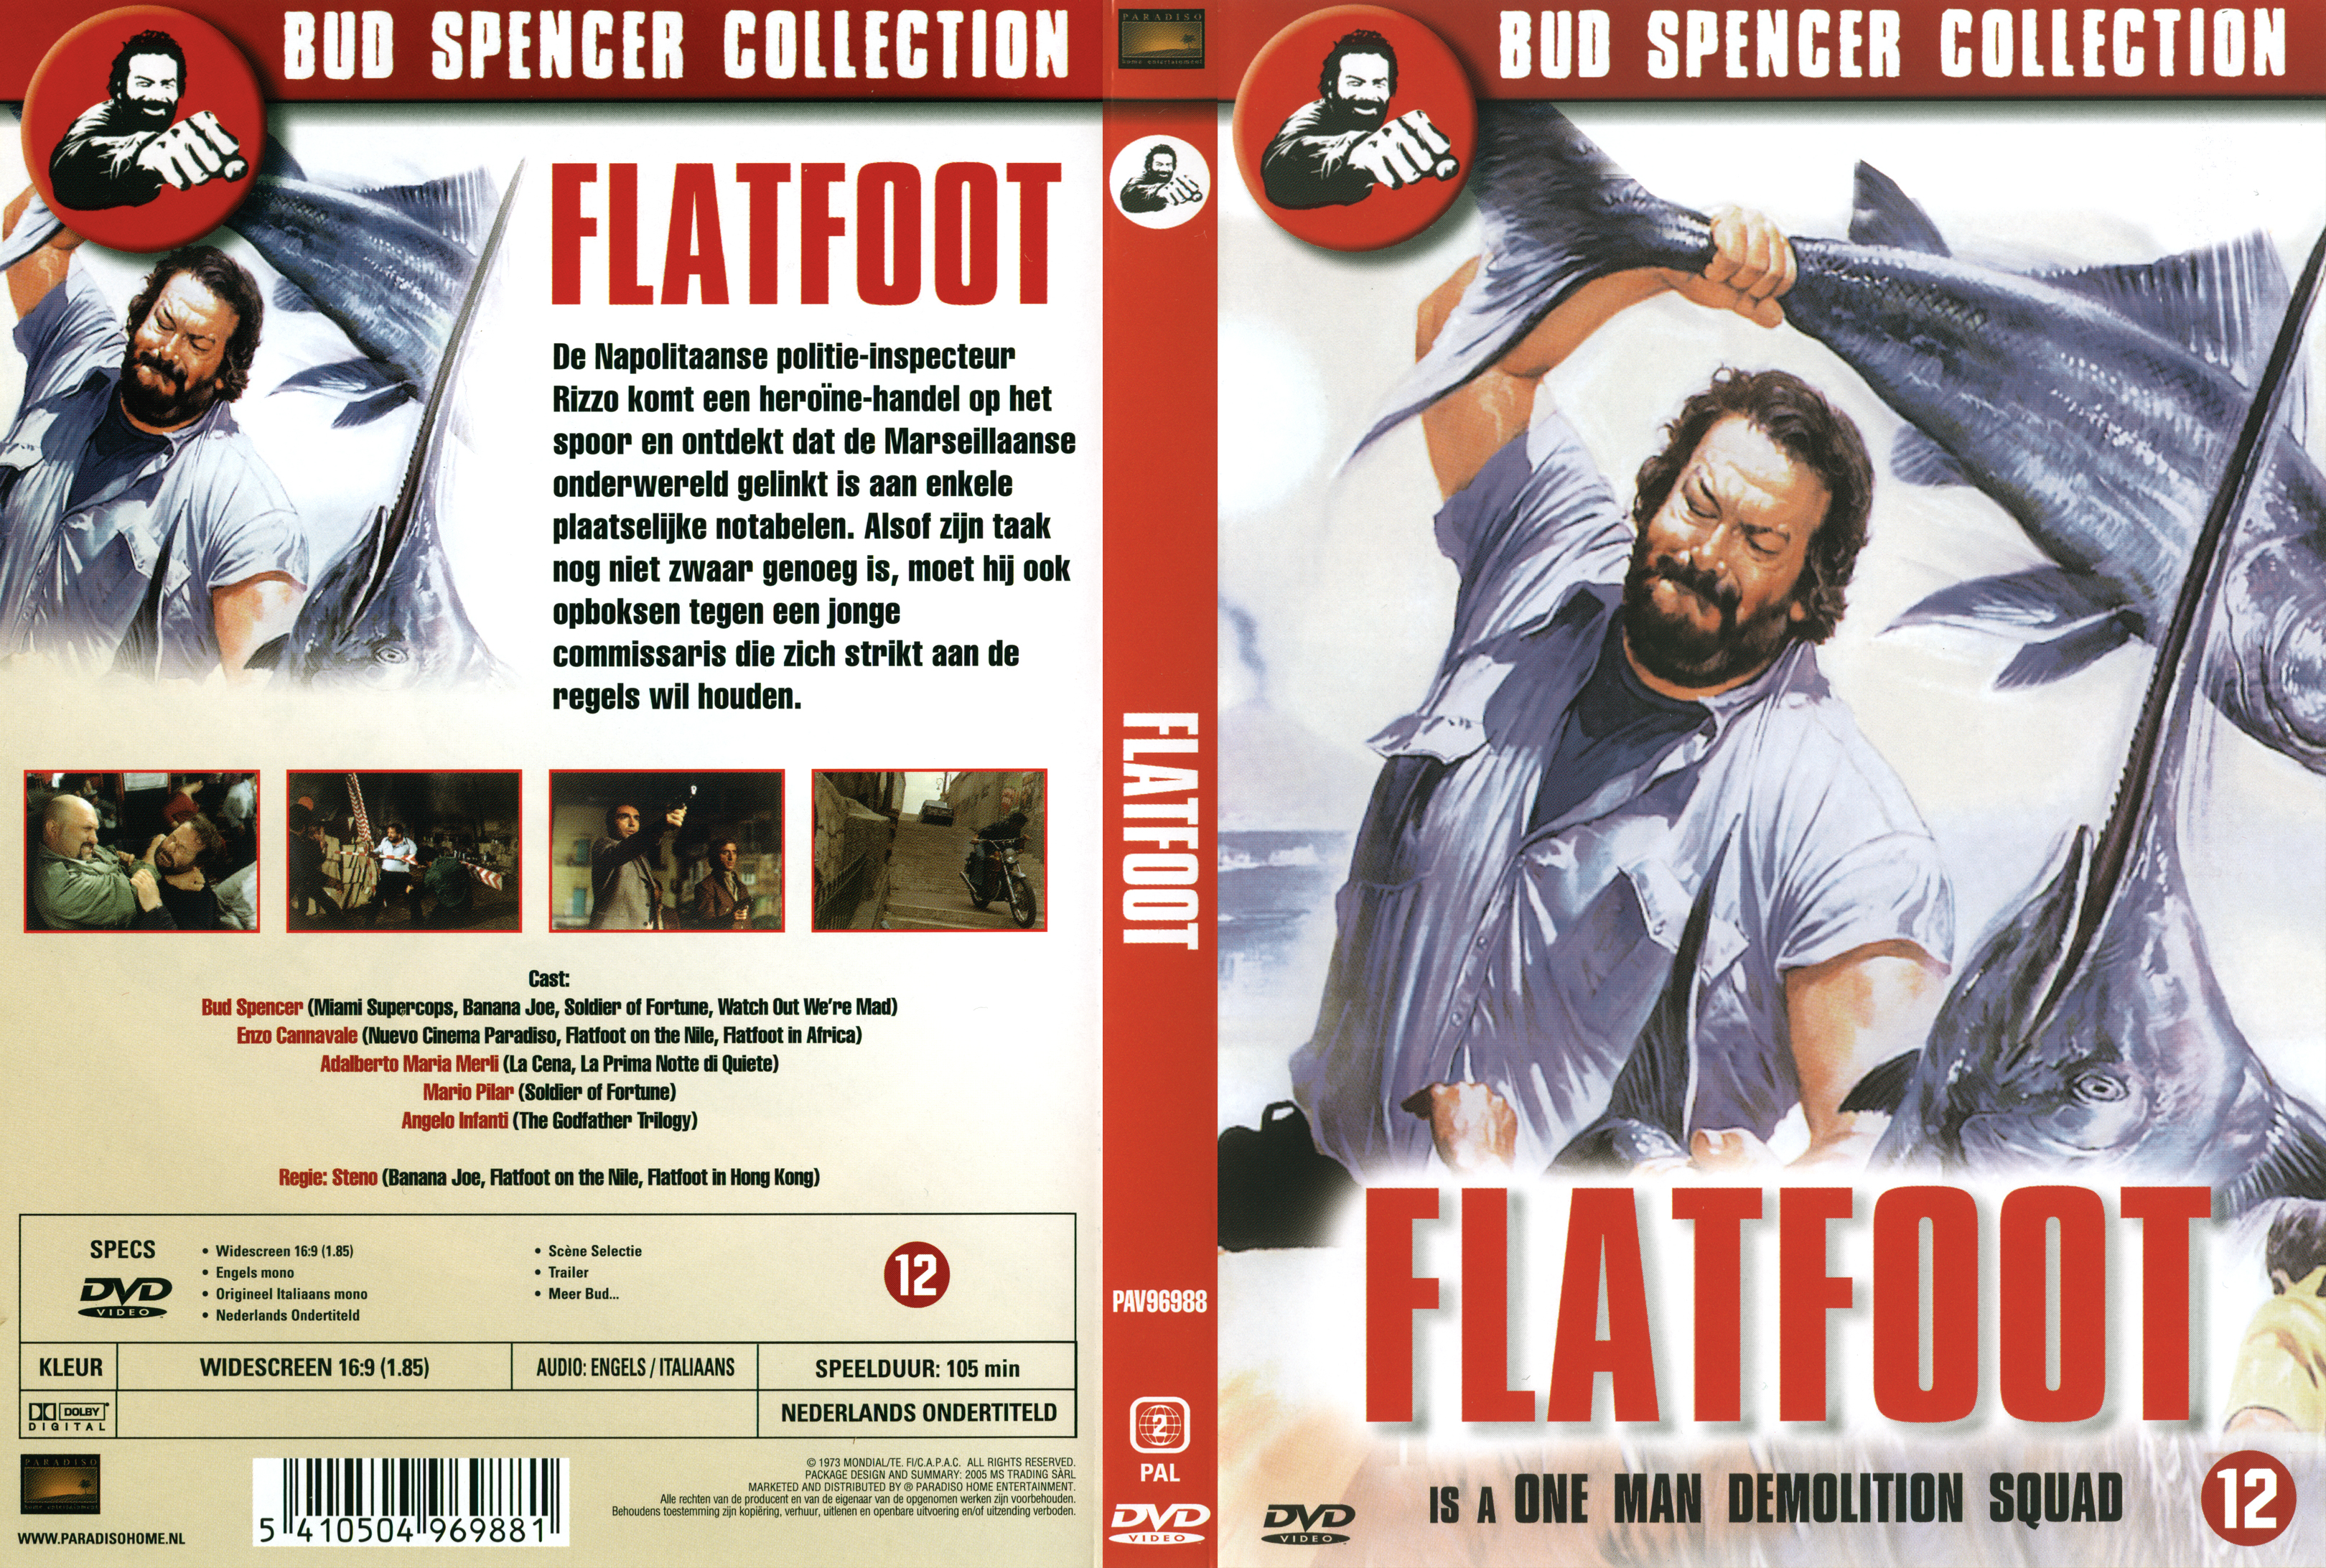 Bud Spencer Flatfoot